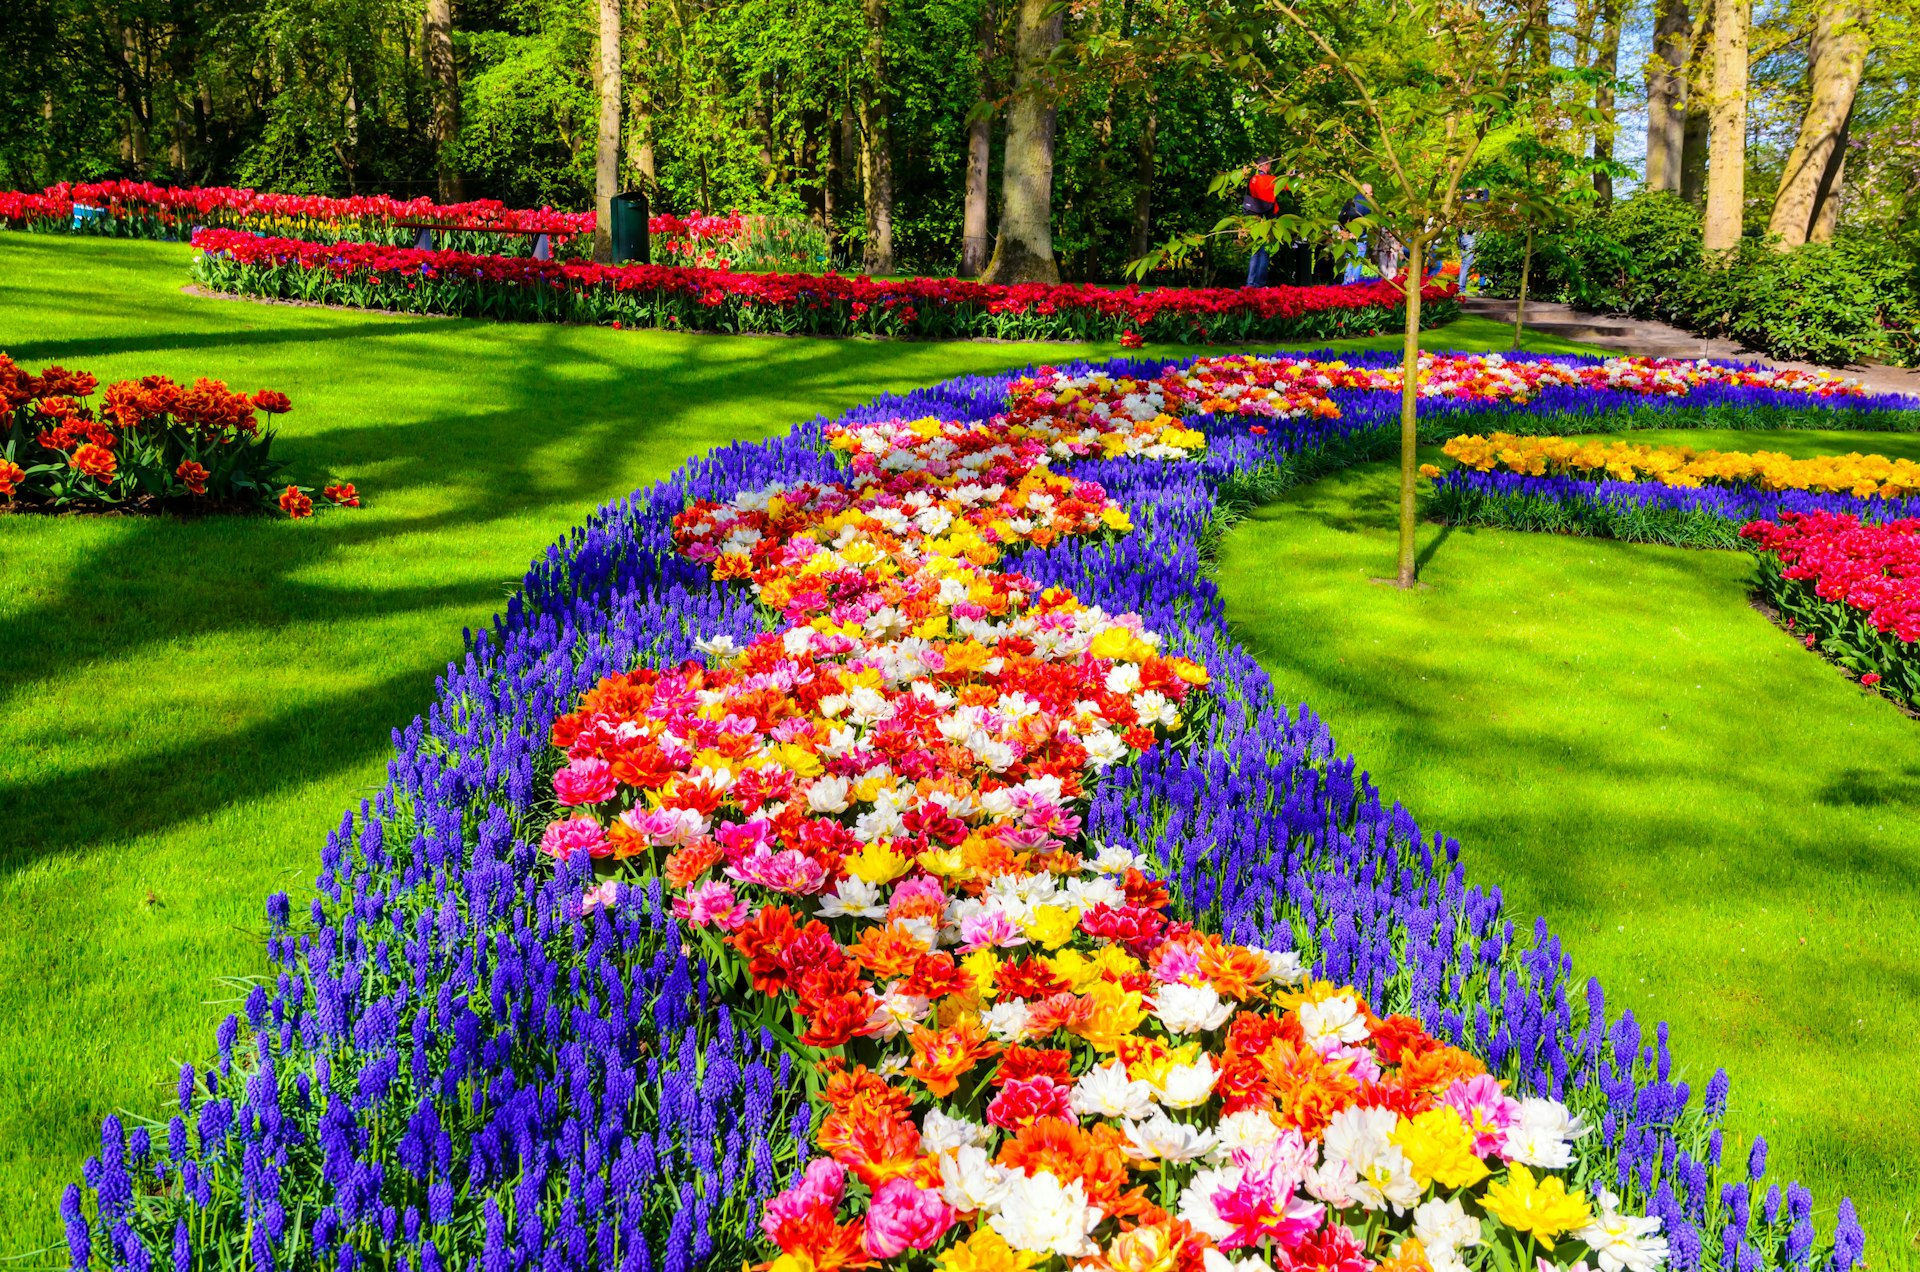 Blooming flowers in Keukenhof Gardens in the Netherlands